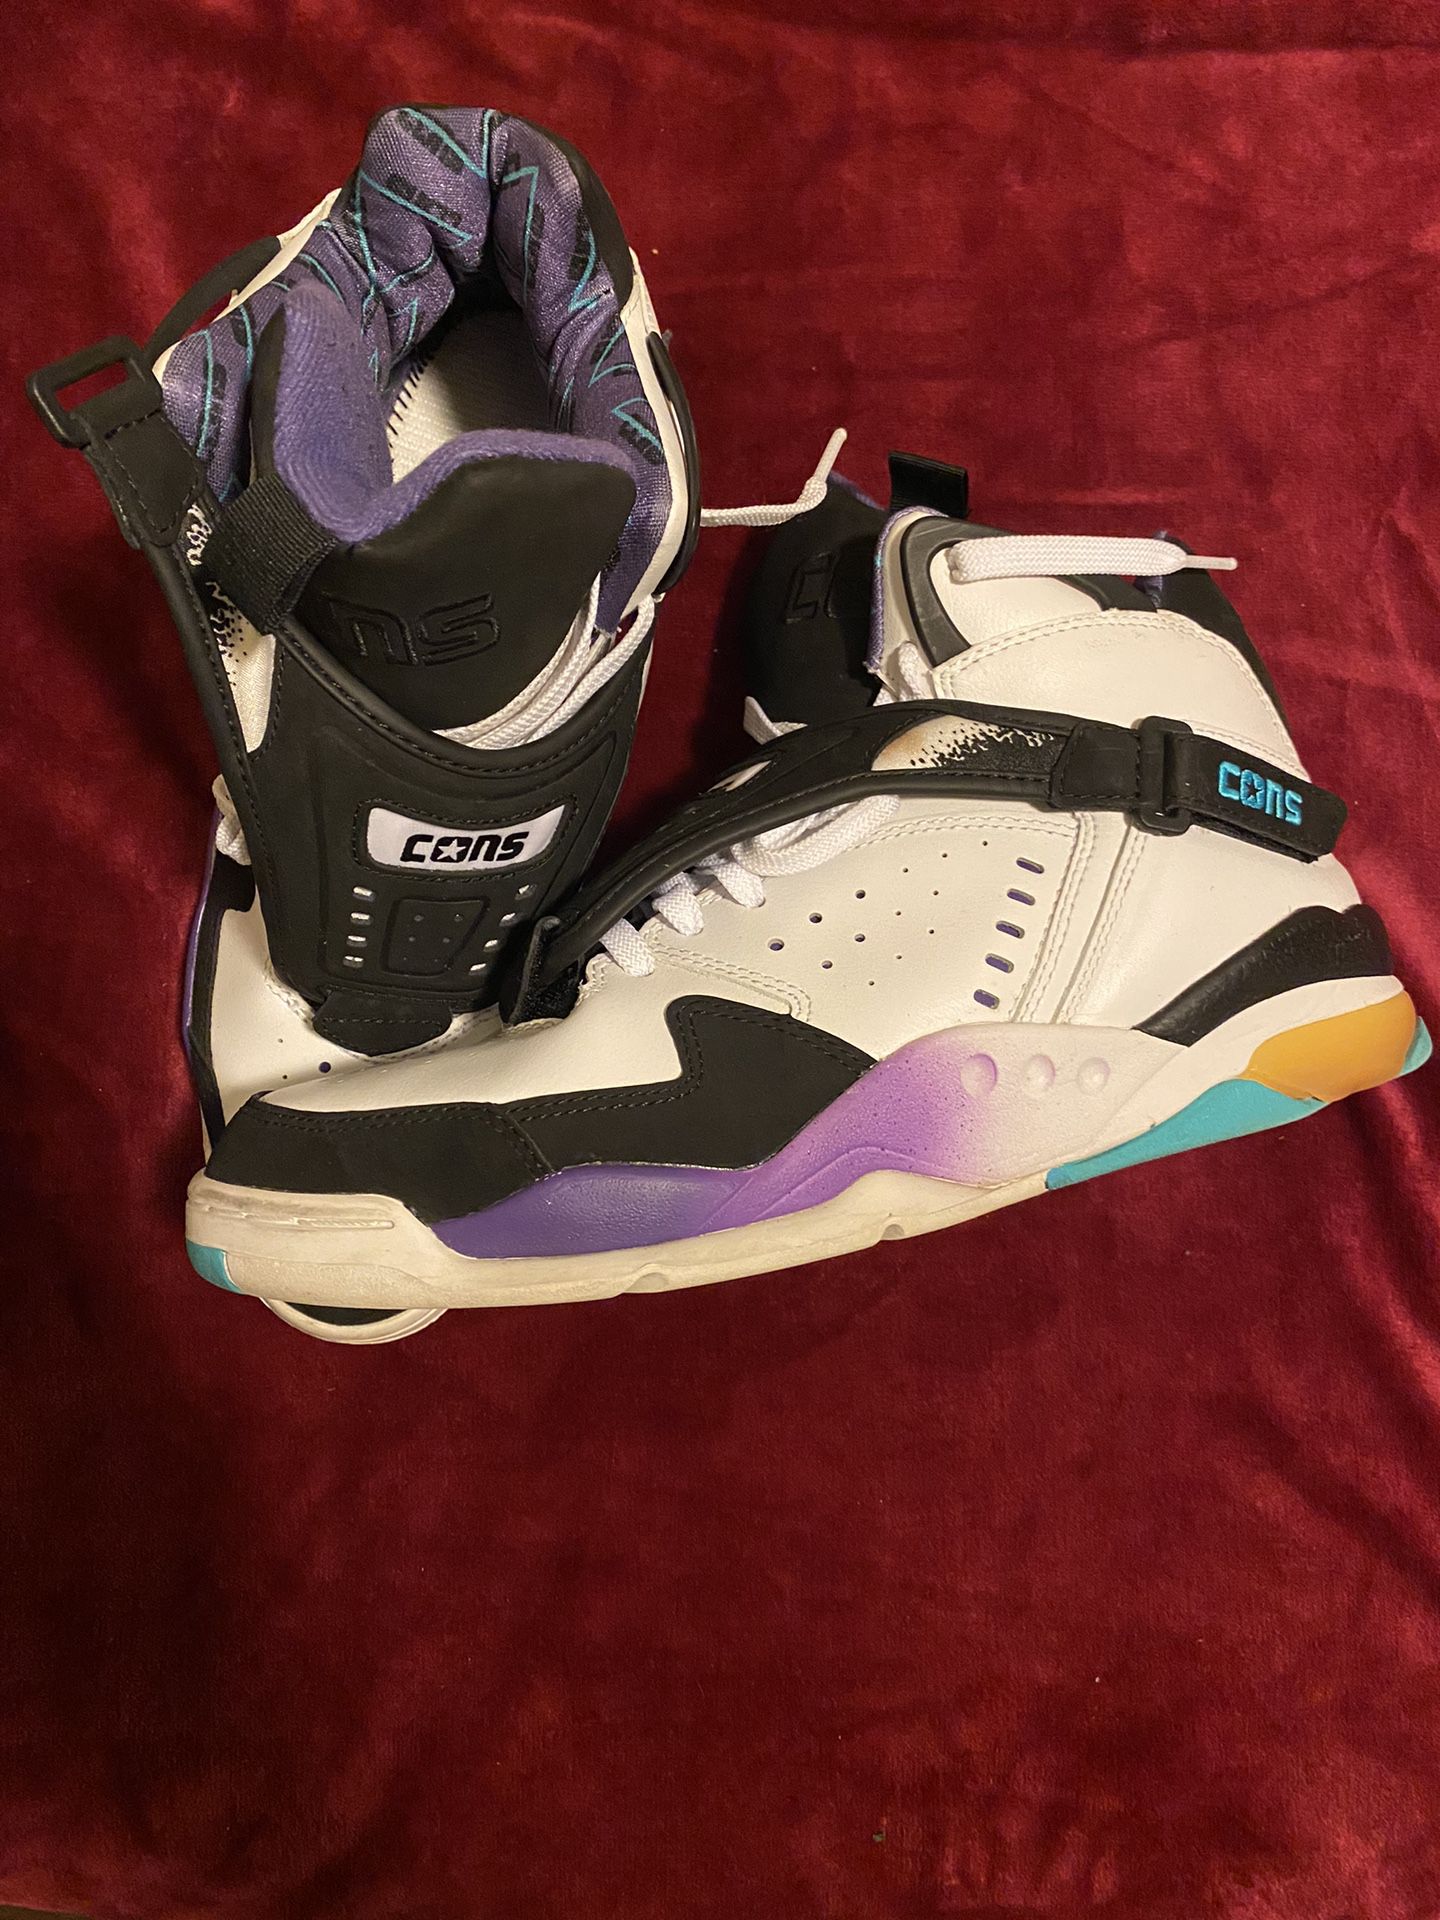 Converse Aero Jam Basketball Shoes (Hornets) - size 12